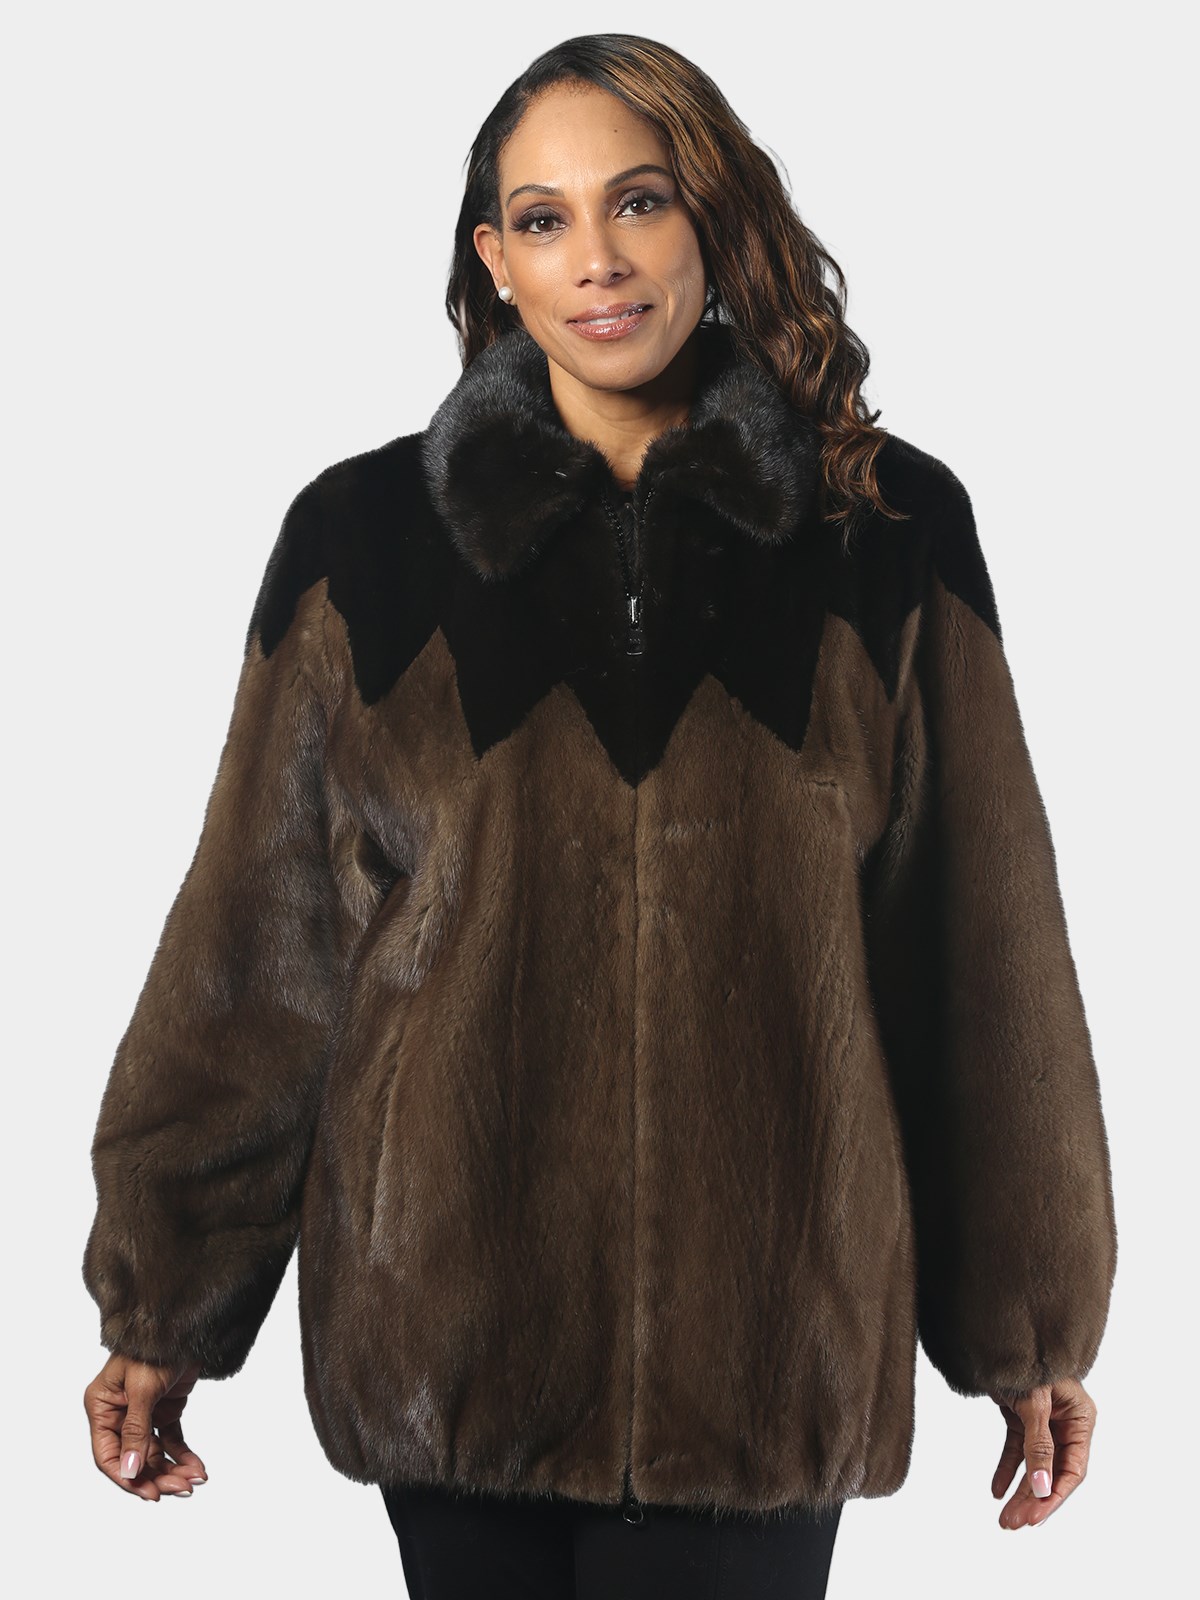 Woman's Natural Surrel and Ranch Mink Fur Jacket with Diamond Cut Yoke